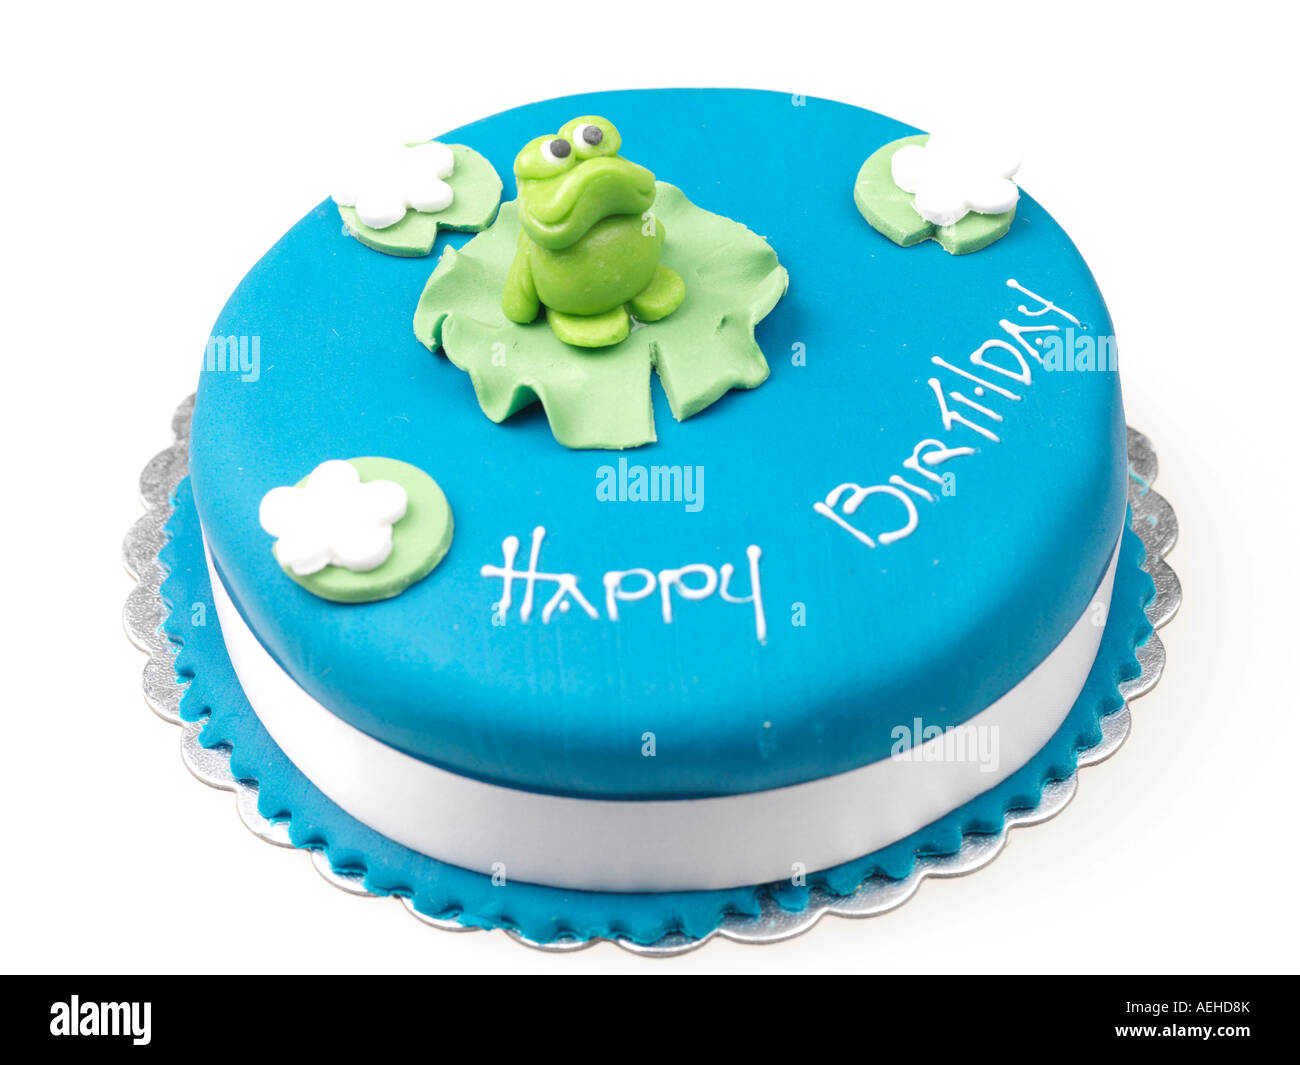 Top more than 76 birthday cake frog design